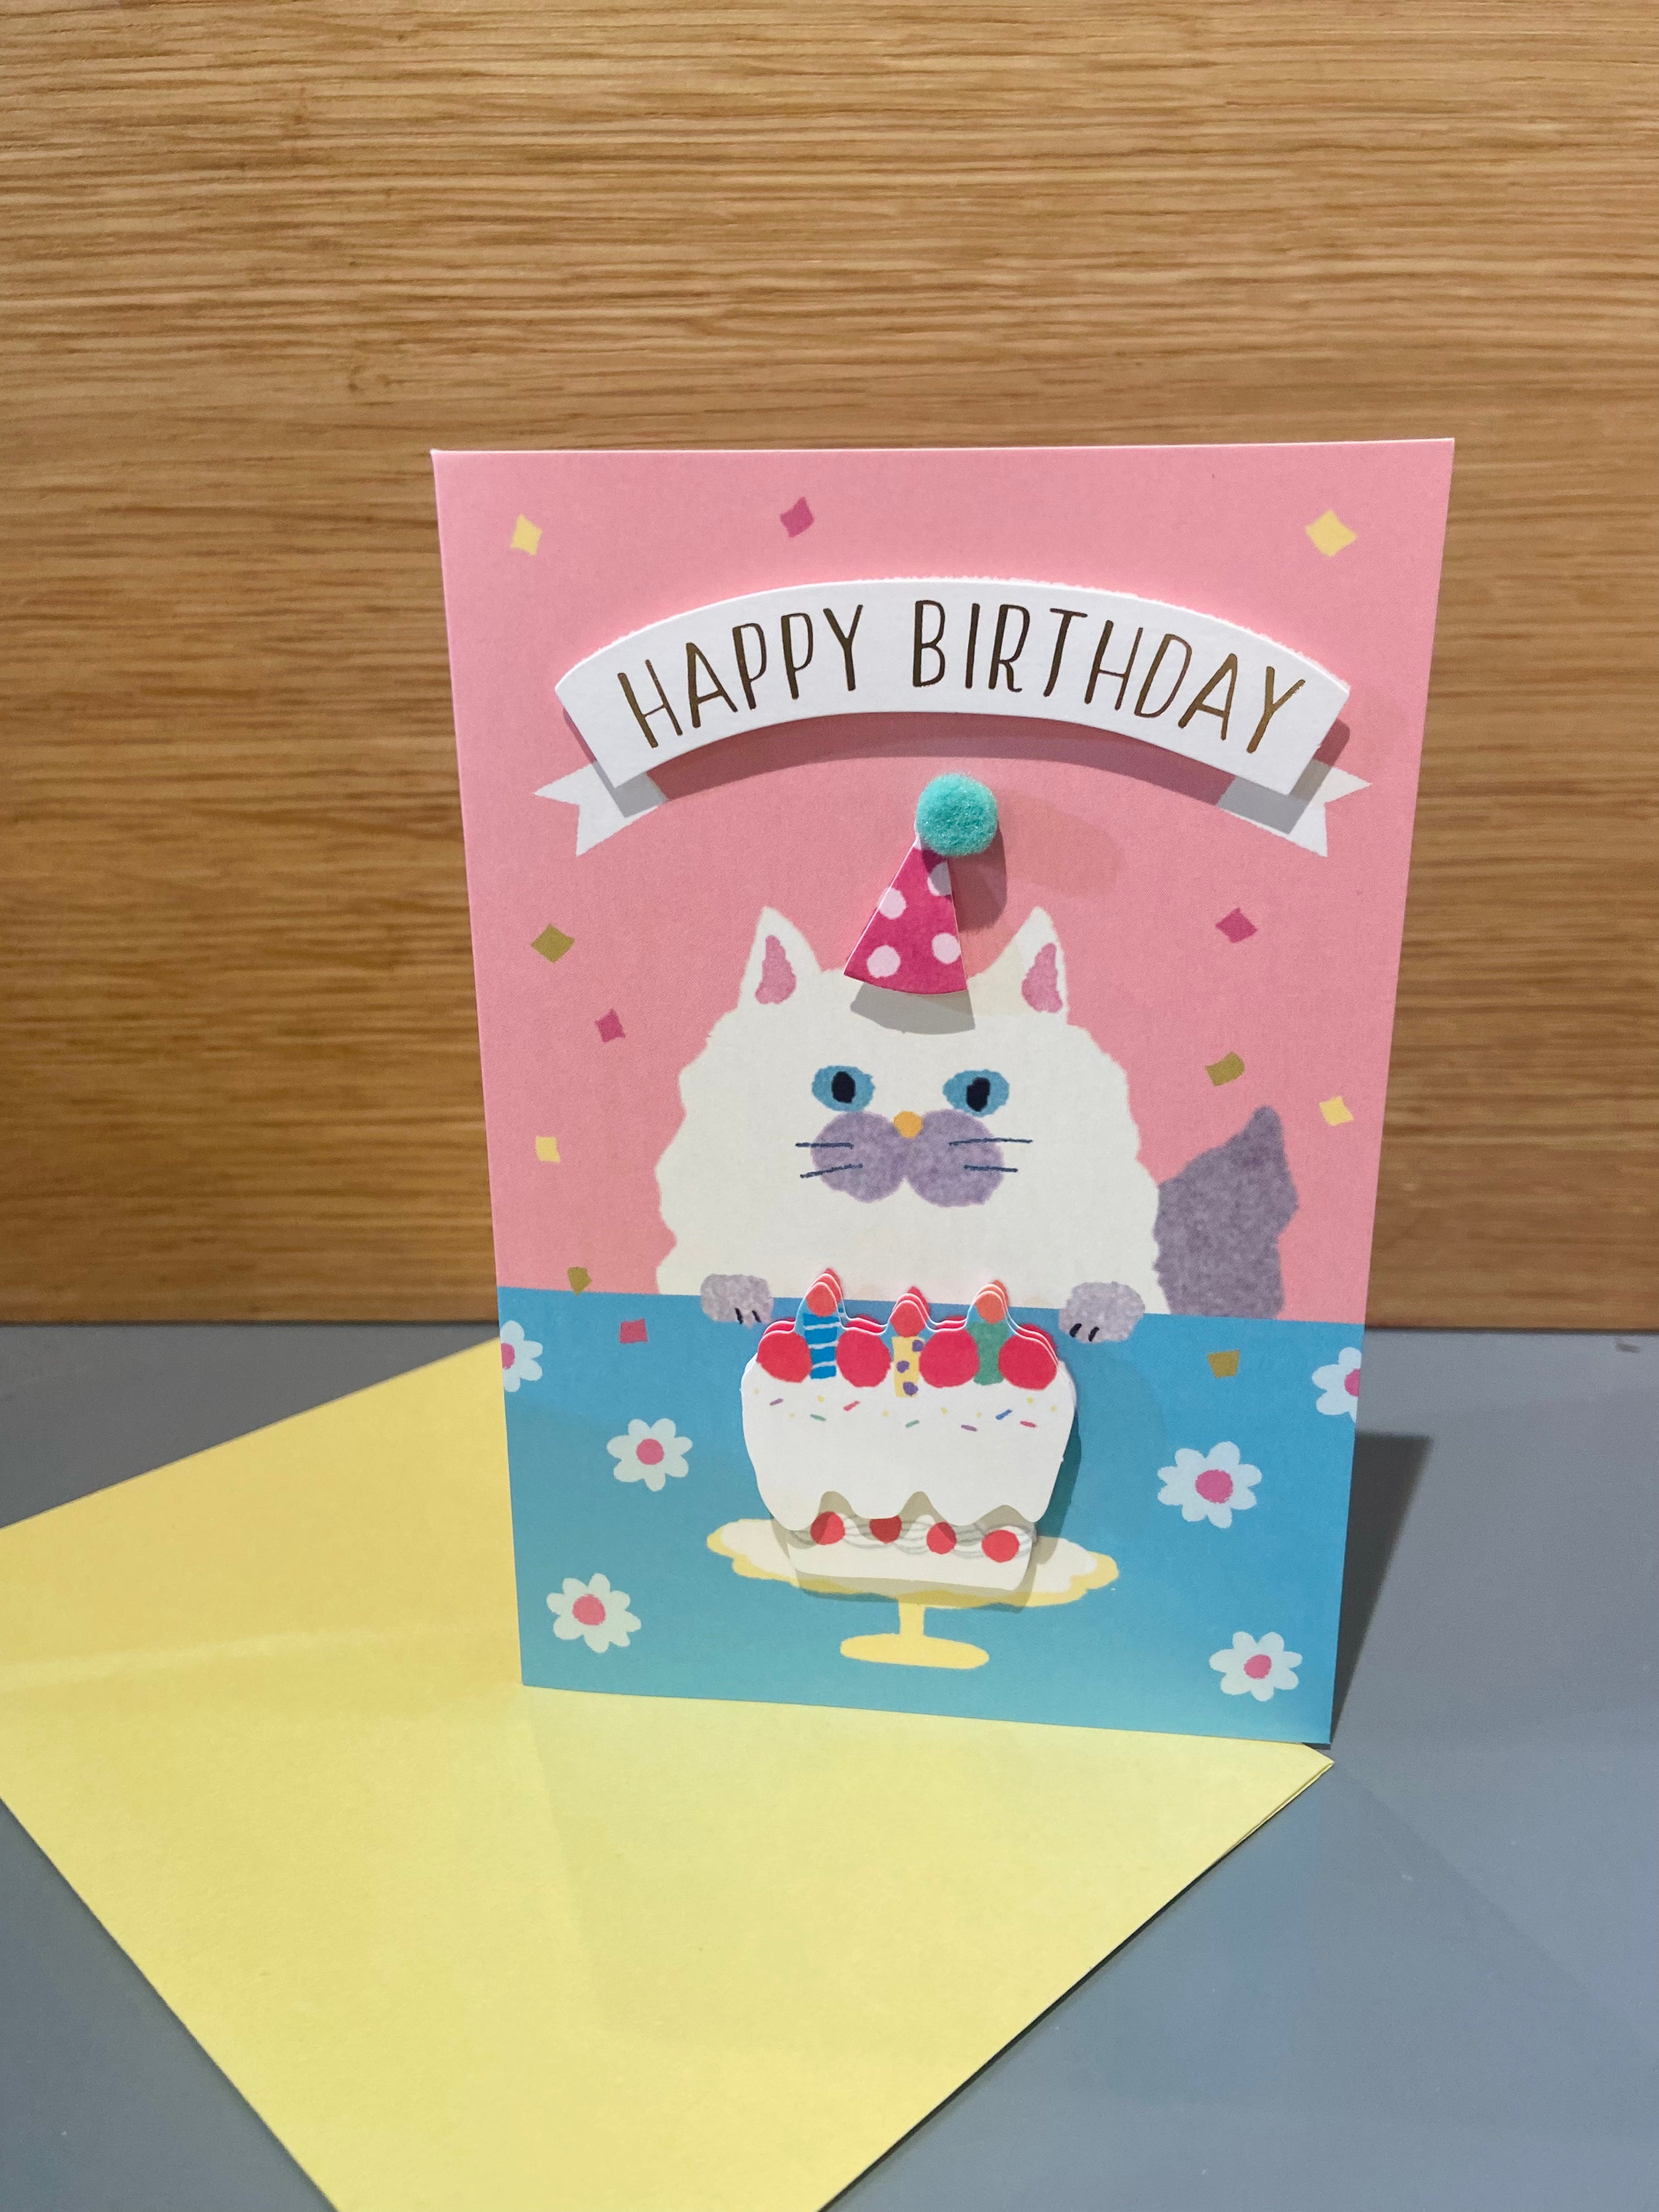 "Happy Birthday" card with cat